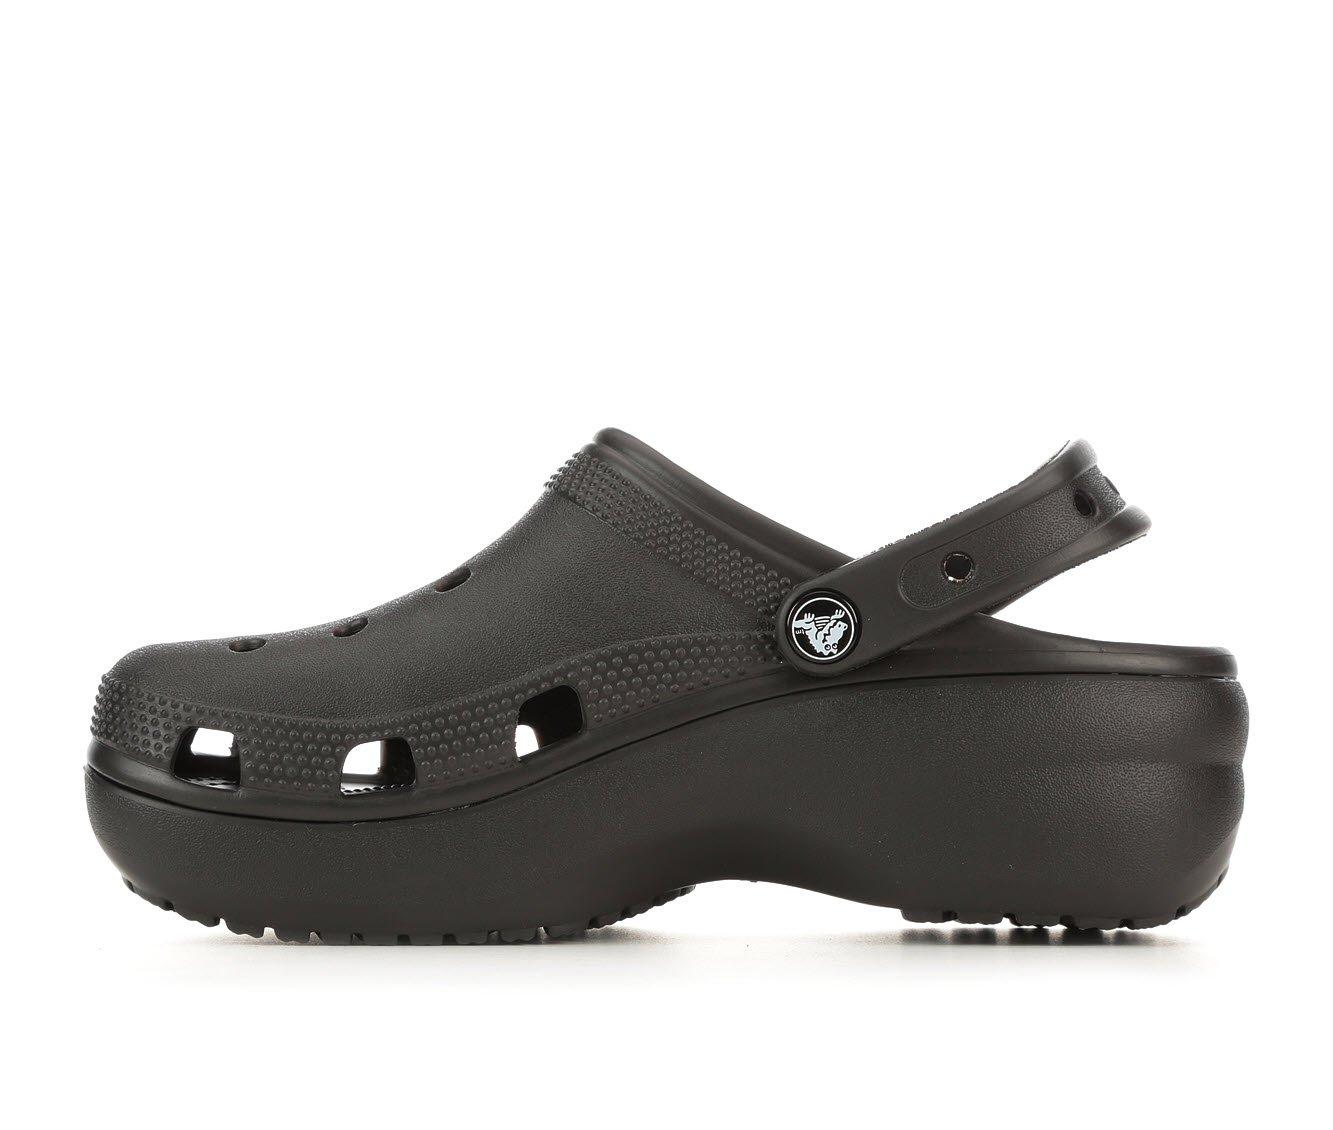 Women's Crocs Classic Platform Clogs